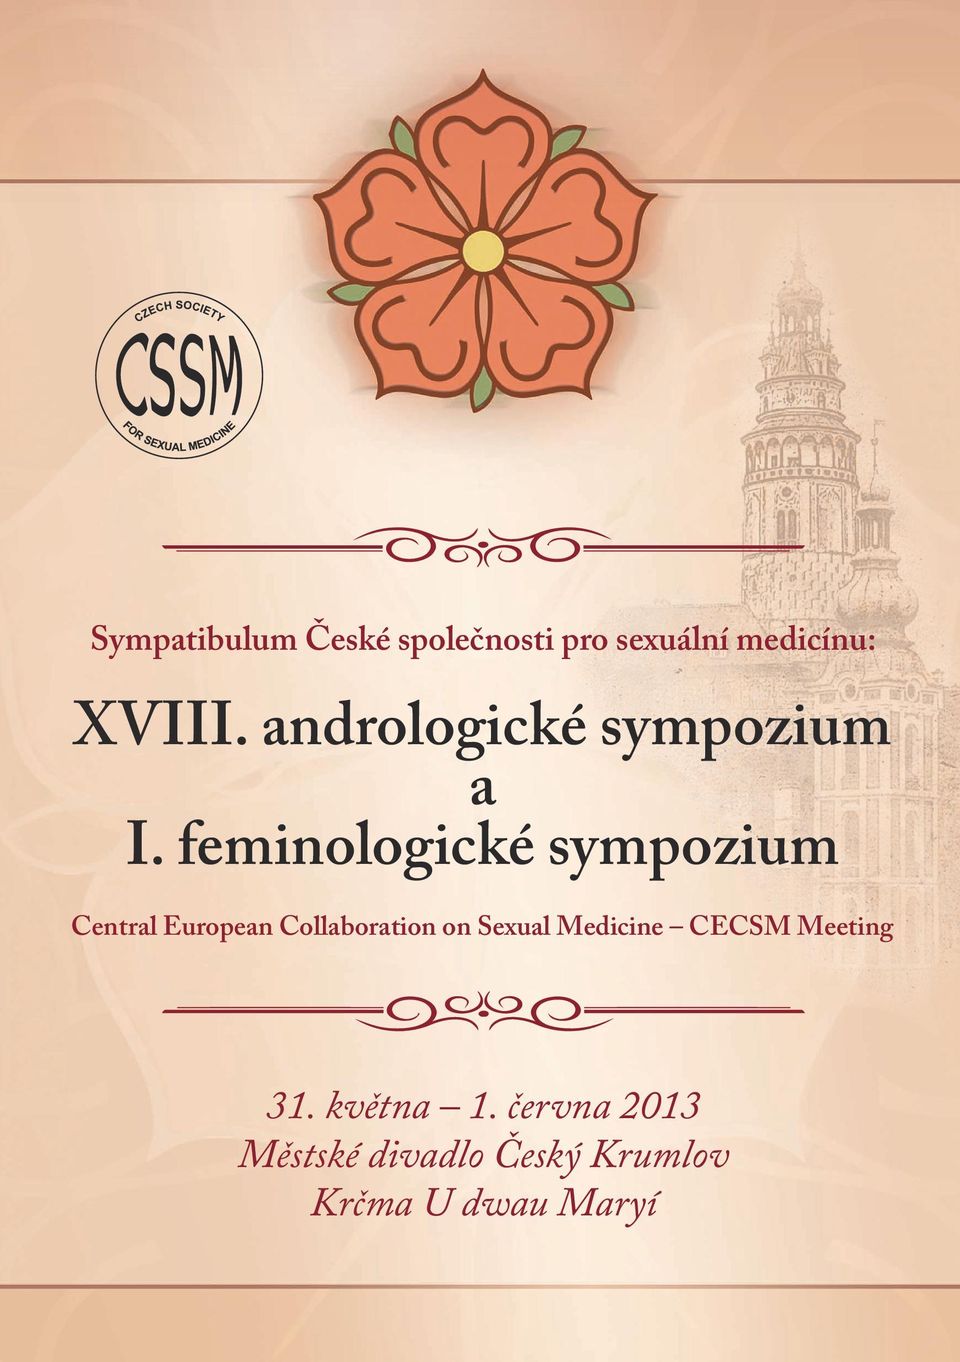 feminologické sympozium Central European Collaboration on